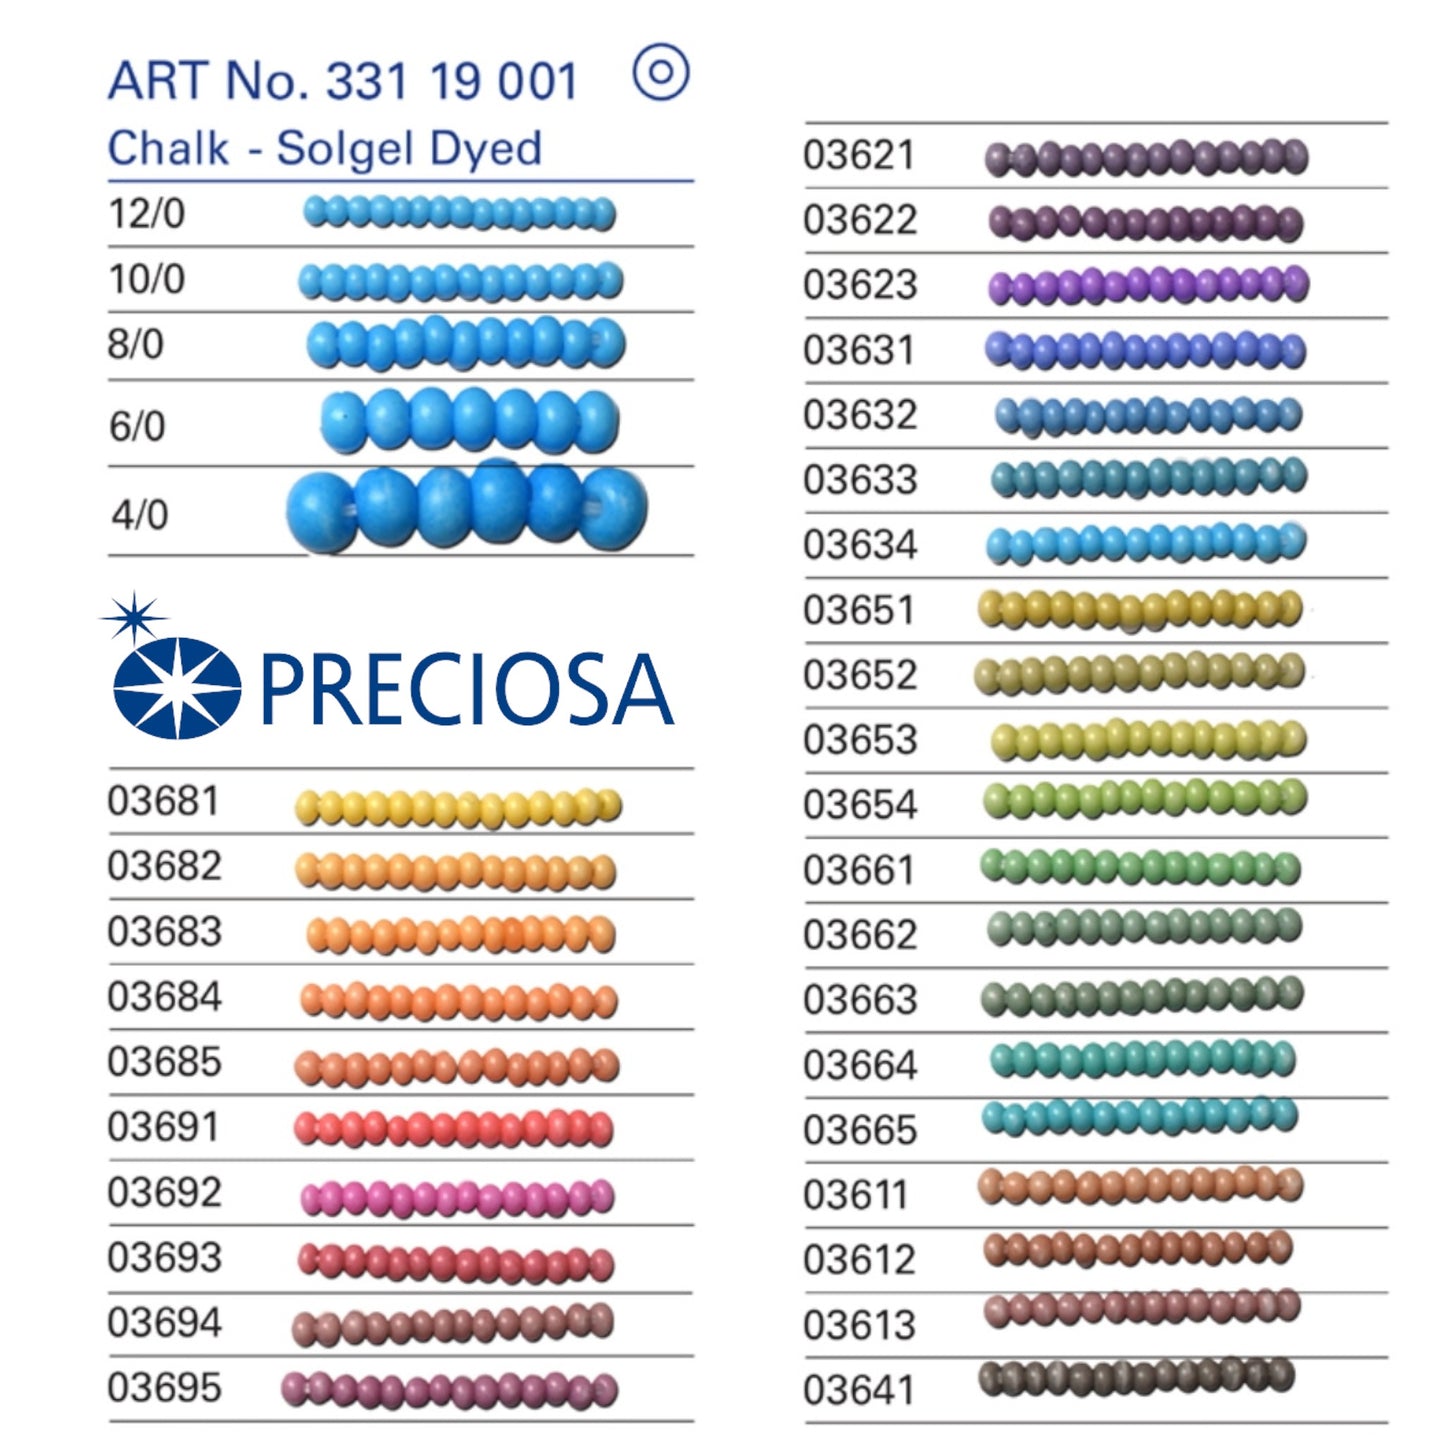 03692 Czech seed beads PRECIOSA round 10/0 lilac. Chalk - Solgel Dyed.